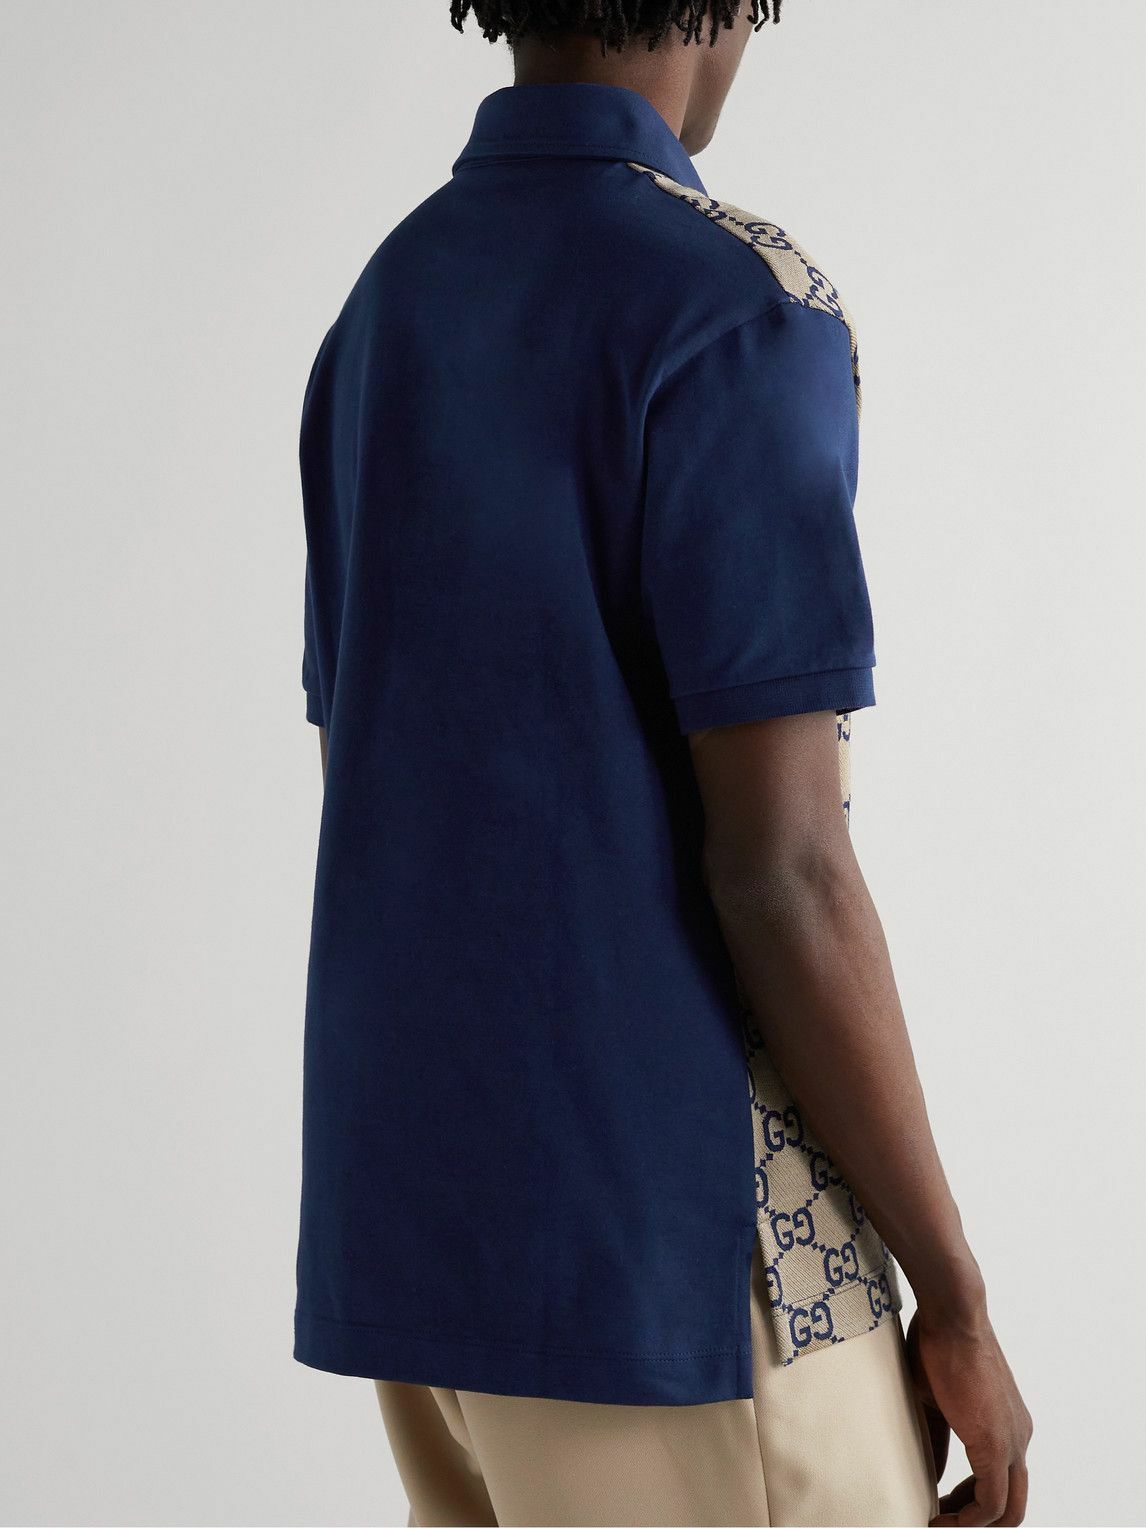 Gucci - Men - Panelled Cotton-jersey and logo-jacquard Silk-Blend Polo Shirt Blue - S